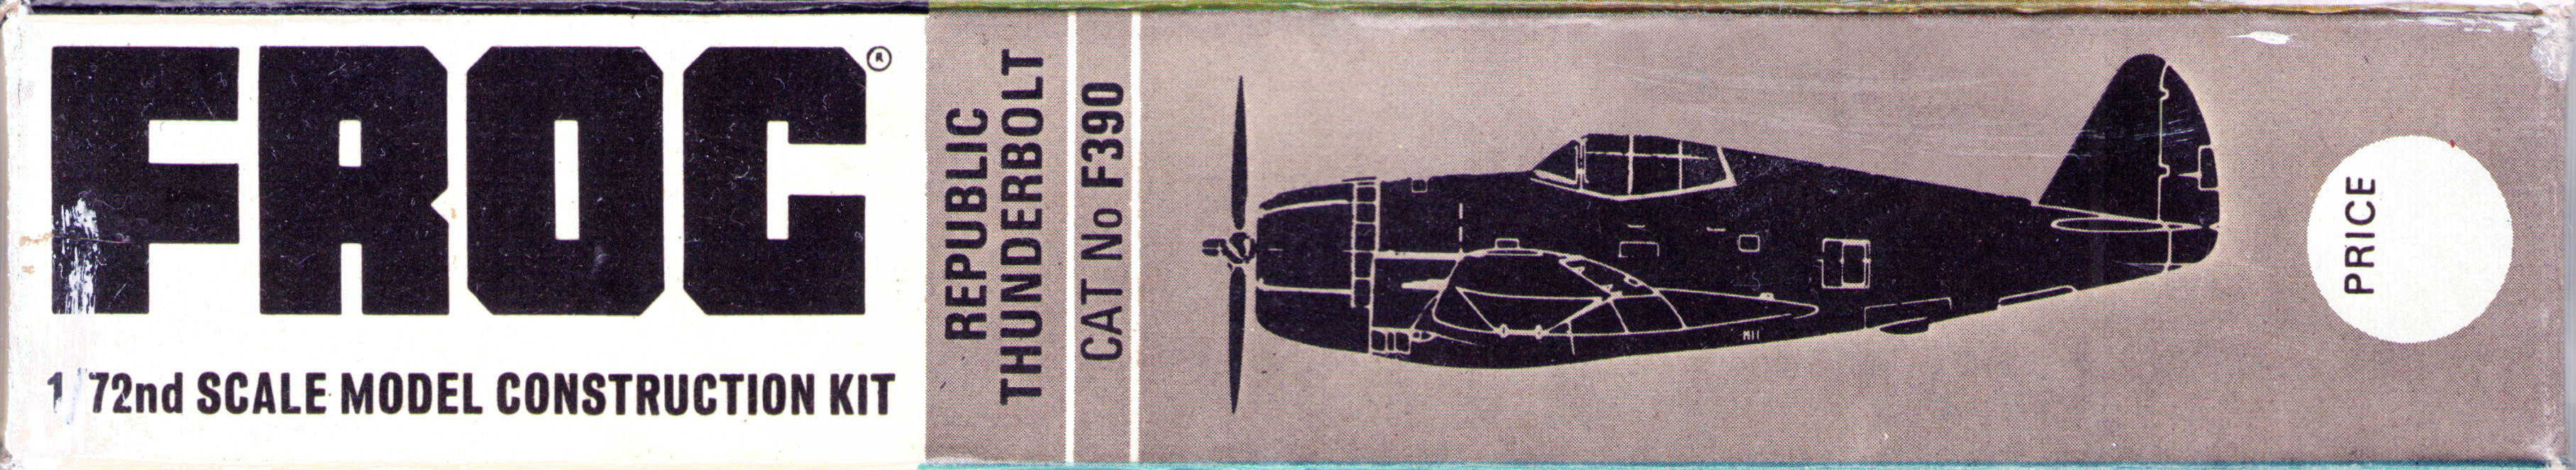 Сторона коробки  FROG F390 P-47 Thunderbolt Fighter bomber, Black series, Rovex Industries Ltd, 1964-65